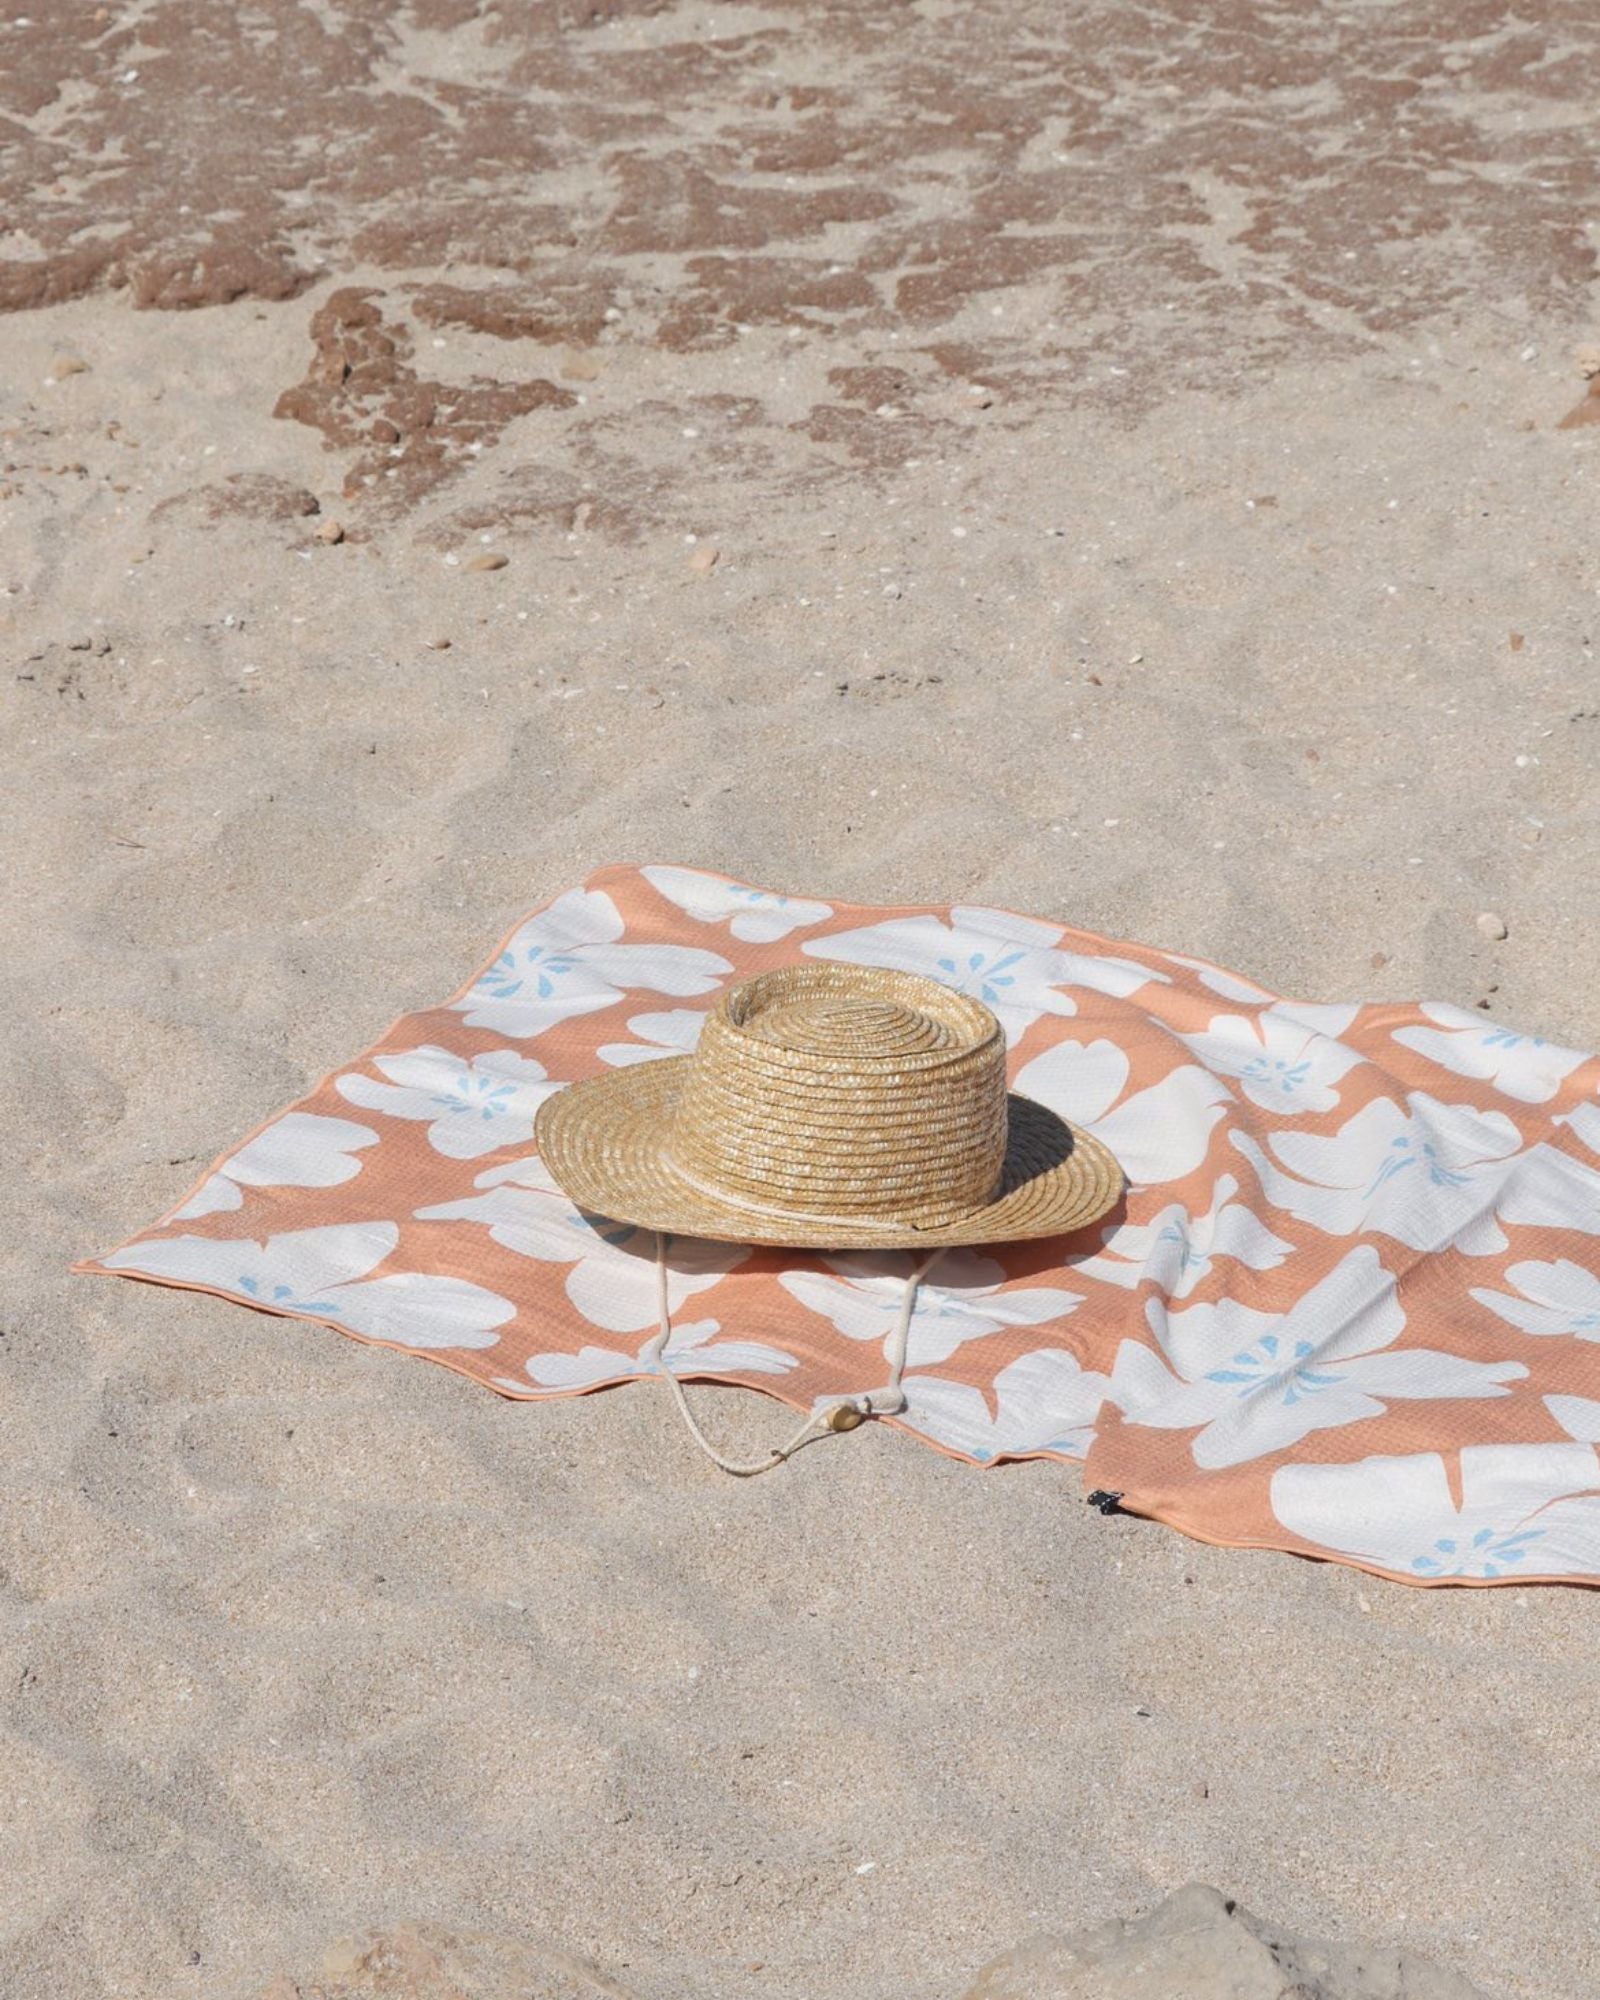 Floral Print Sand Free Towel Designed in Australia